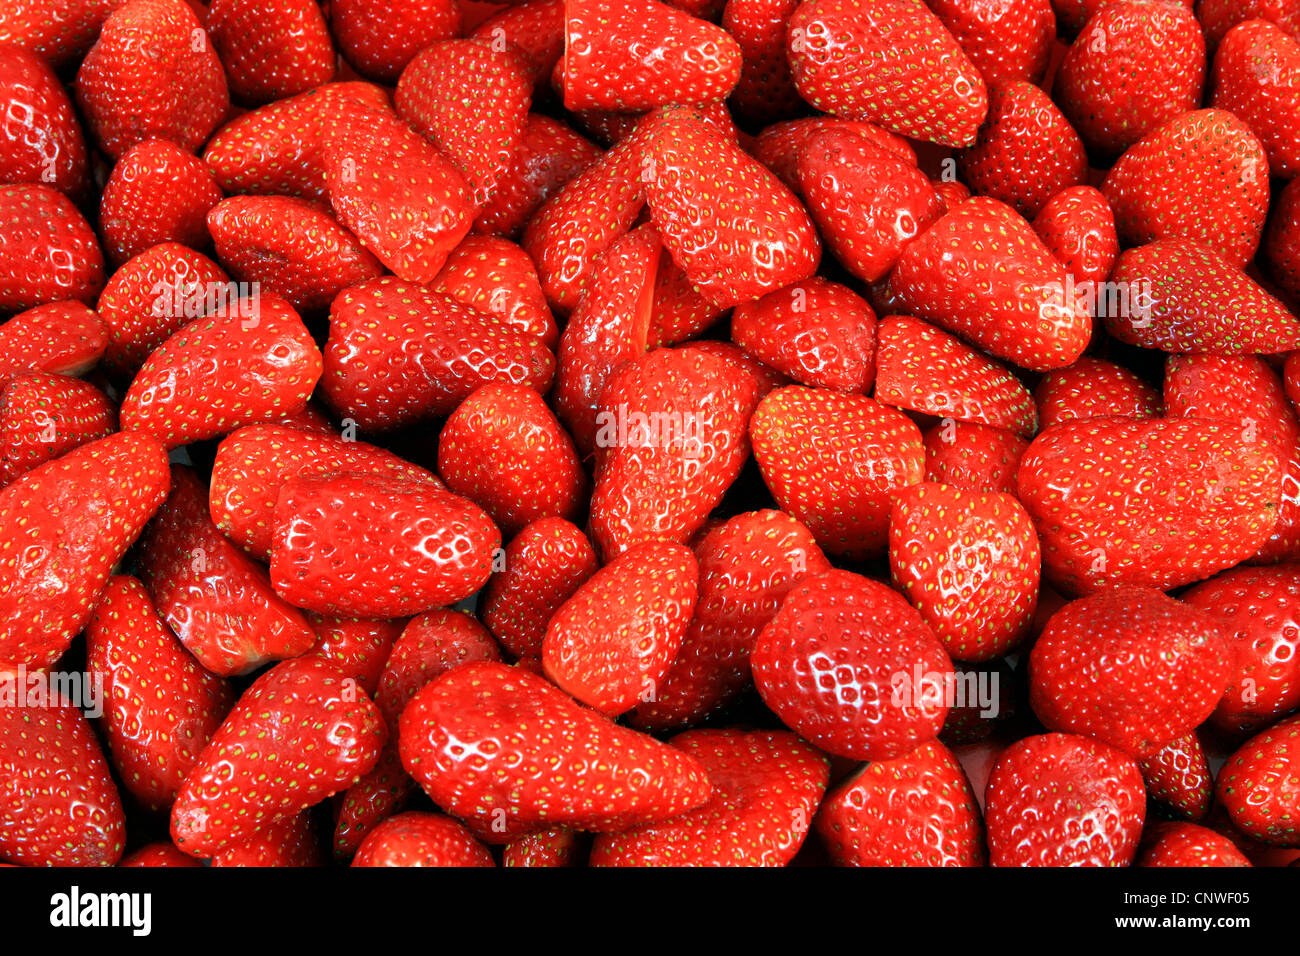 hybrid strawberry, garden strawberry (Fragaria x ananassa, Fragaria ananassa), cleaned and cut strawberries Stock Photo